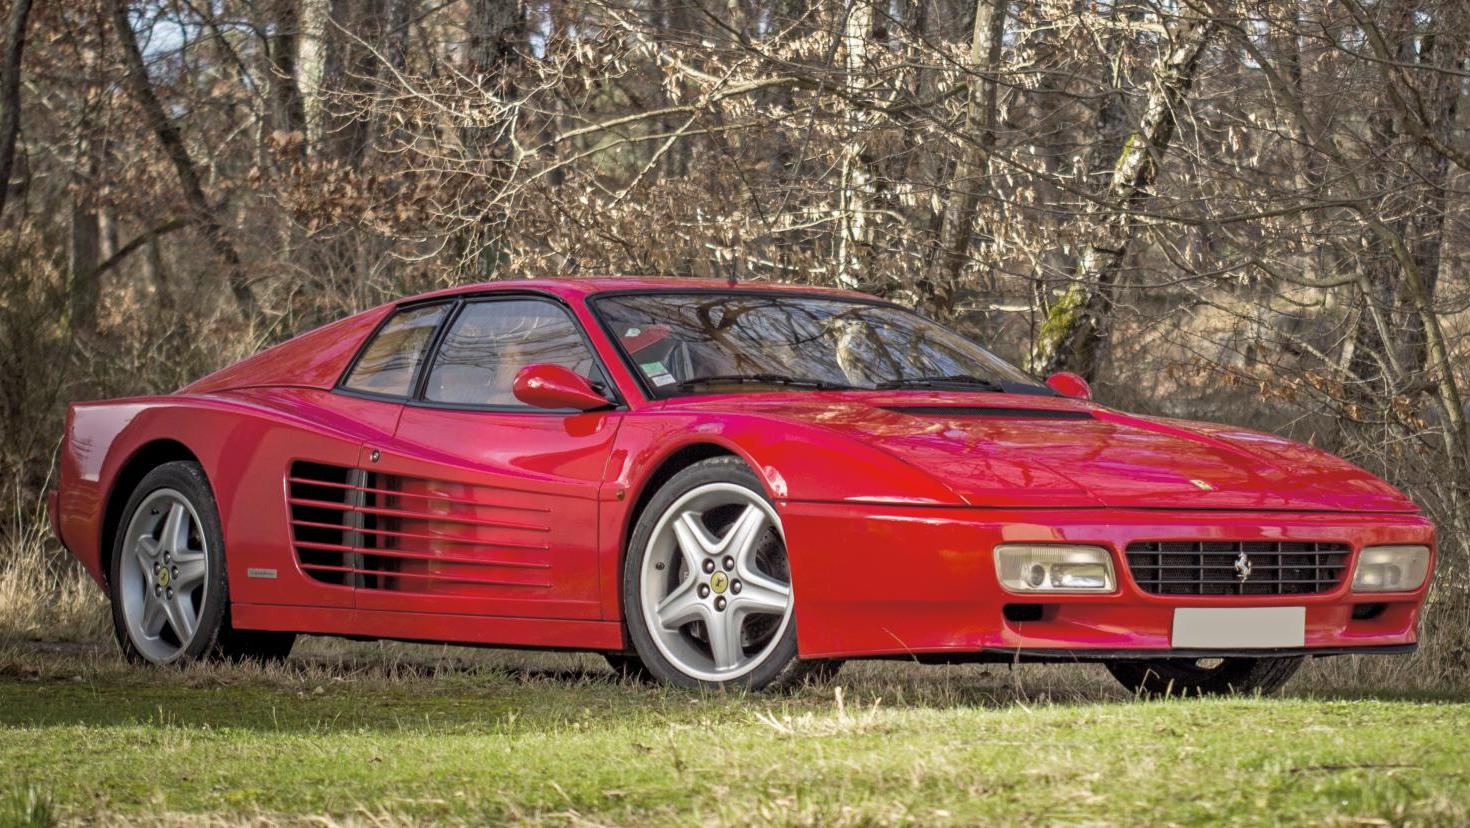 240 000 € Ferrari 512 TR, voiture ayant appartenu à Johnny Hallyday entre 1994 et... Hallyday rocks !